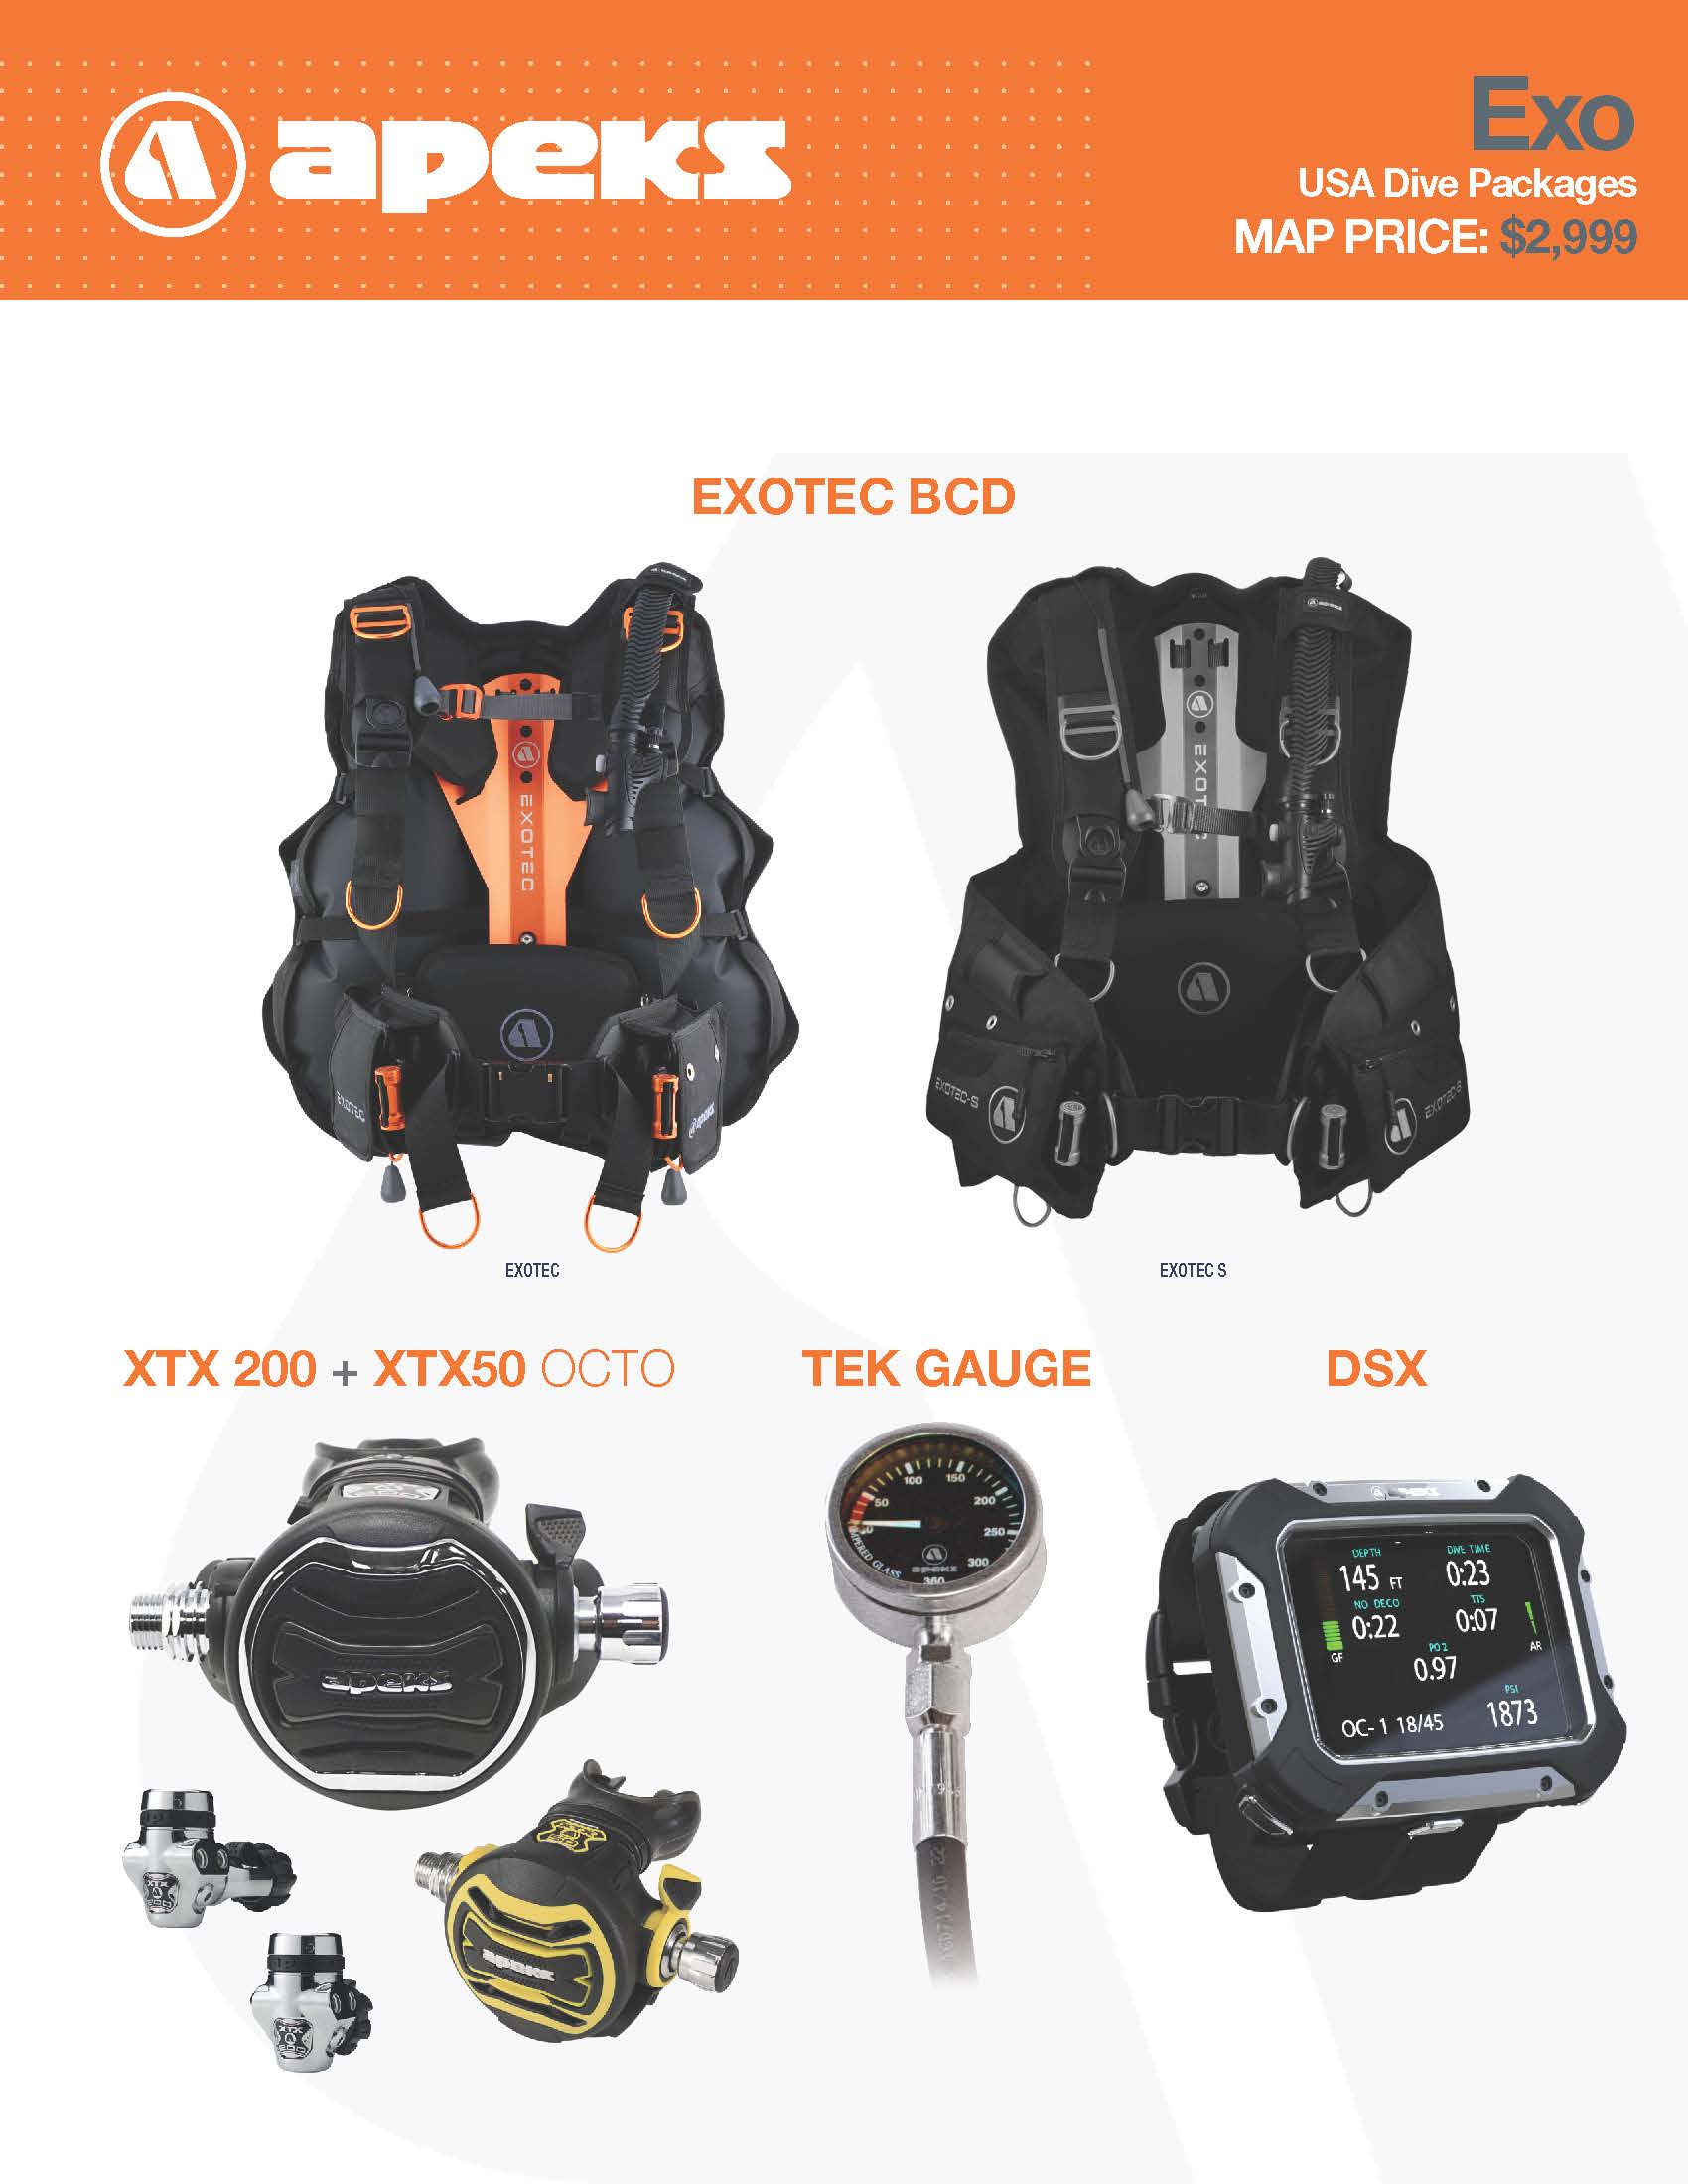 Apeks Exo BCD & XTX200 Regulator Scuba Diving Package